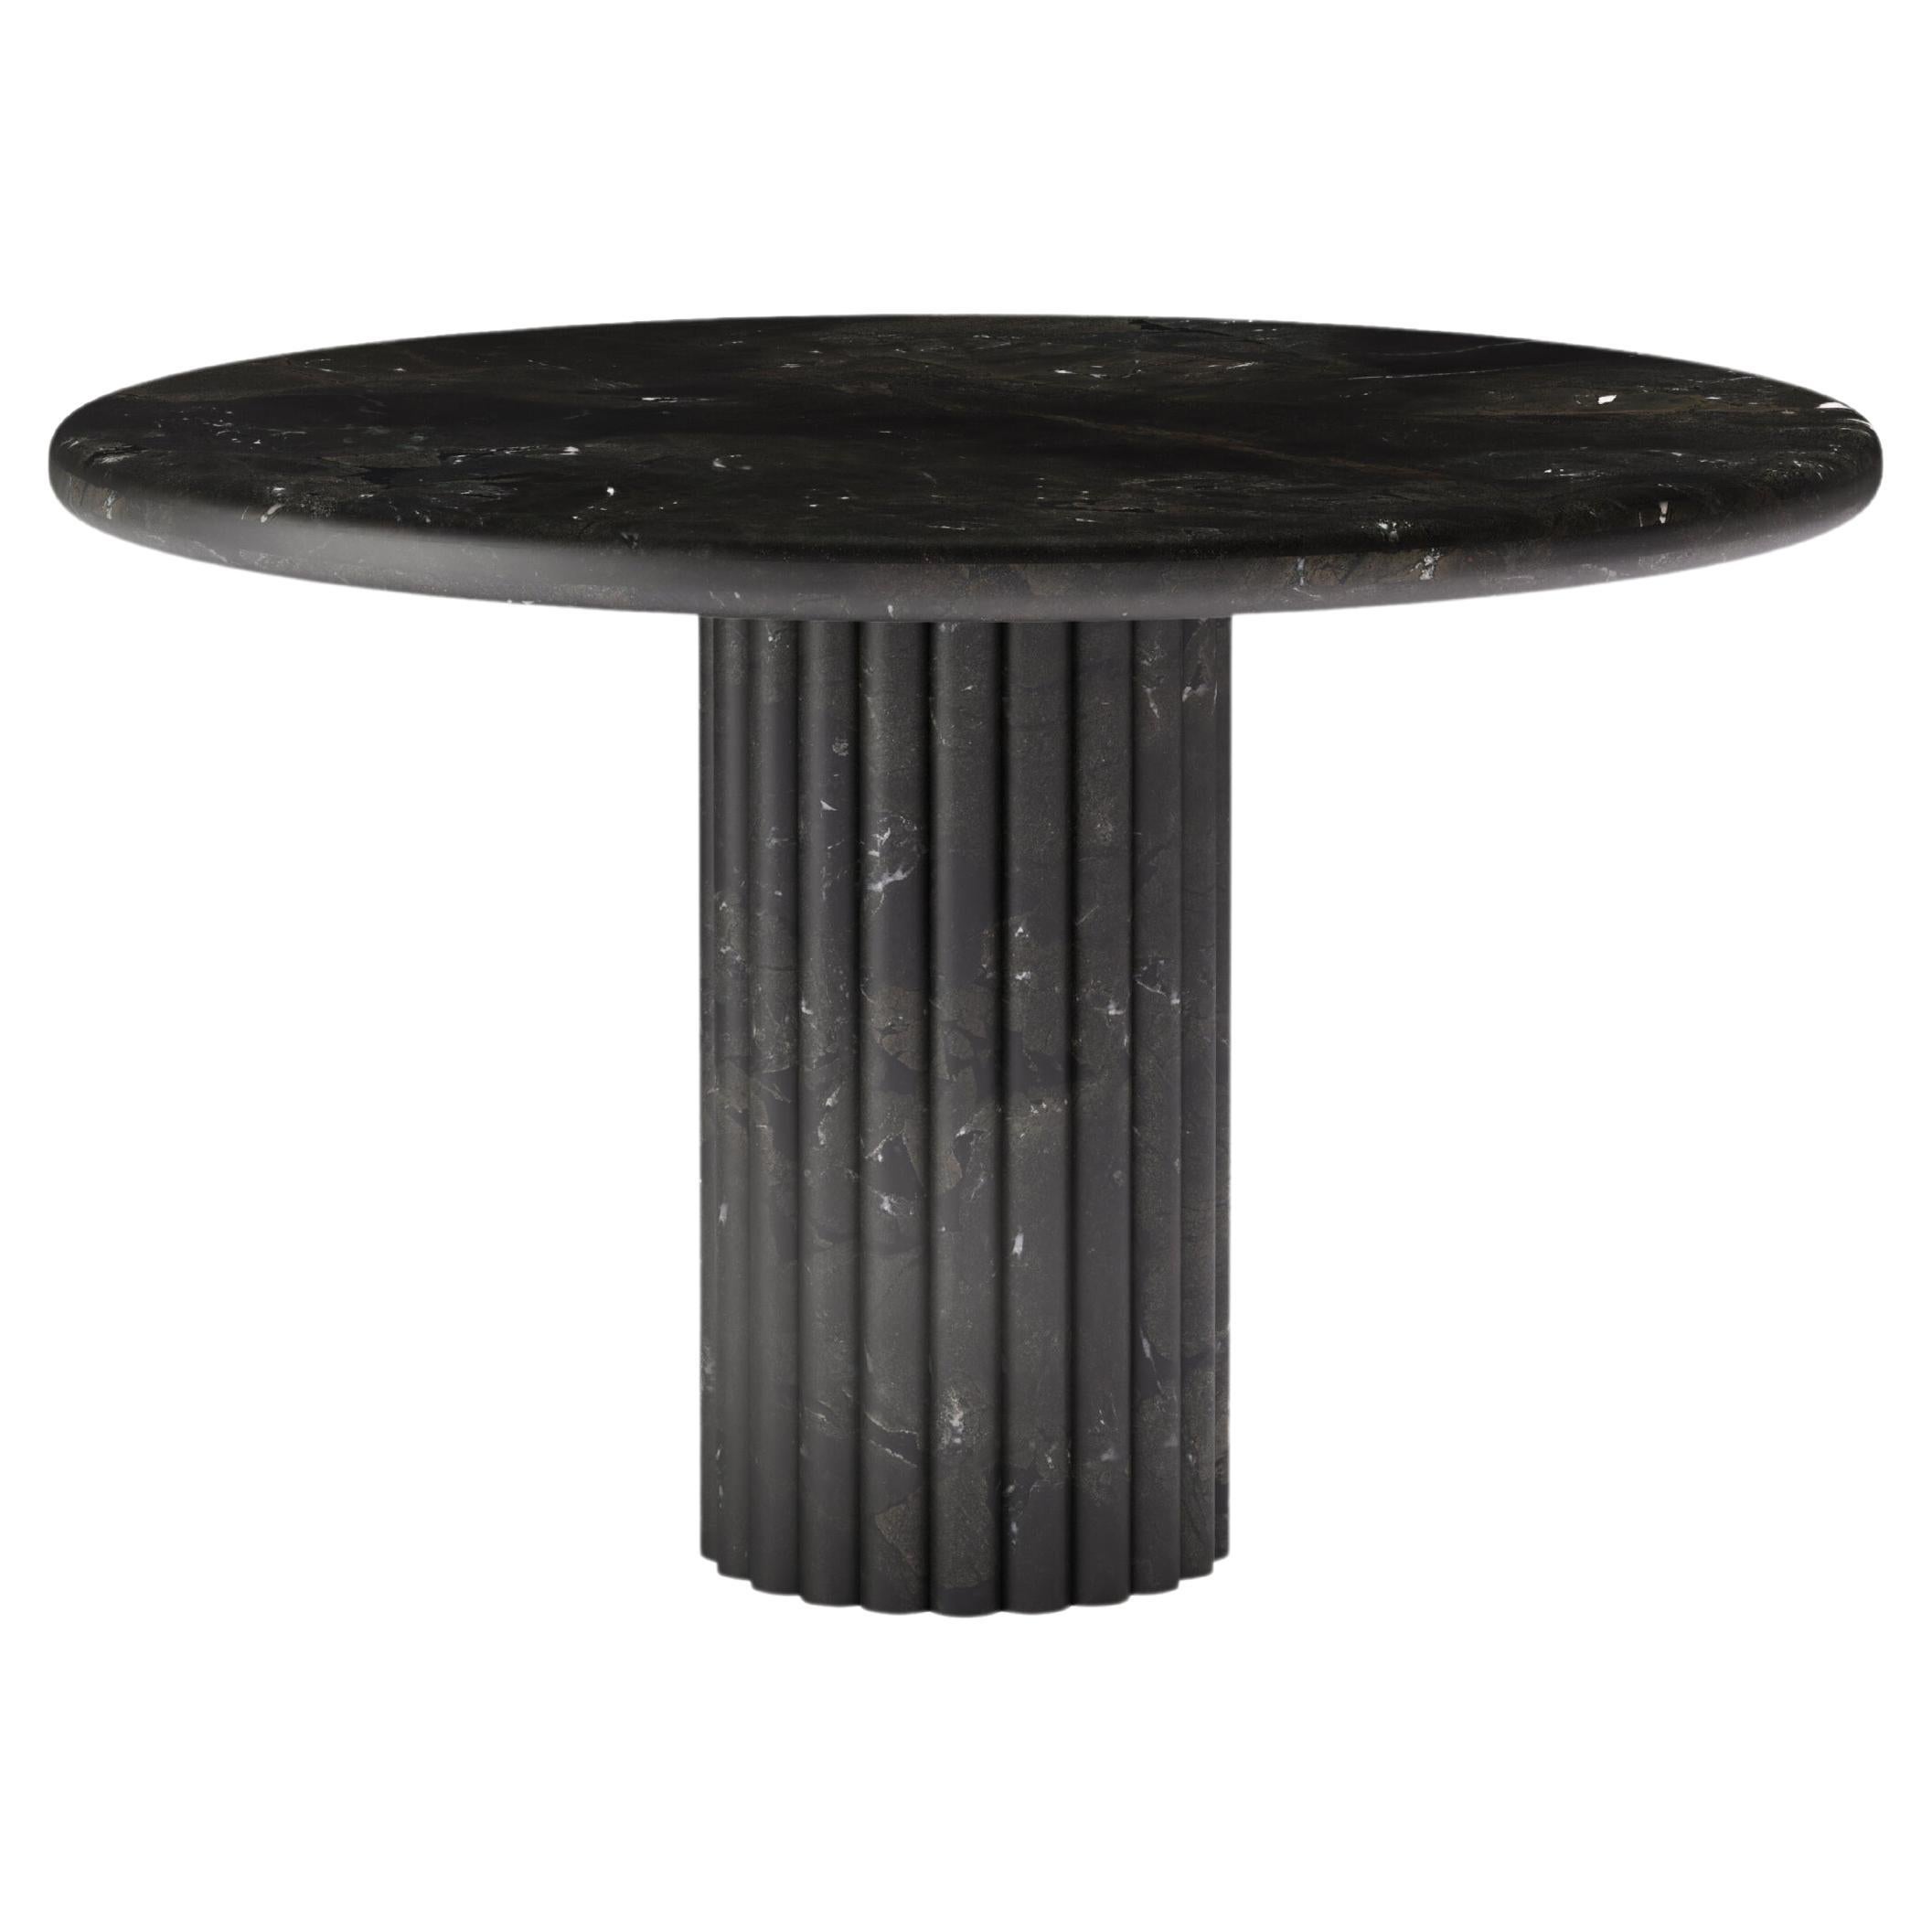 FORM(LA) Fluta Round Dining Table 42”L x 42”W x 30”H Negresco Quartzite For Sale